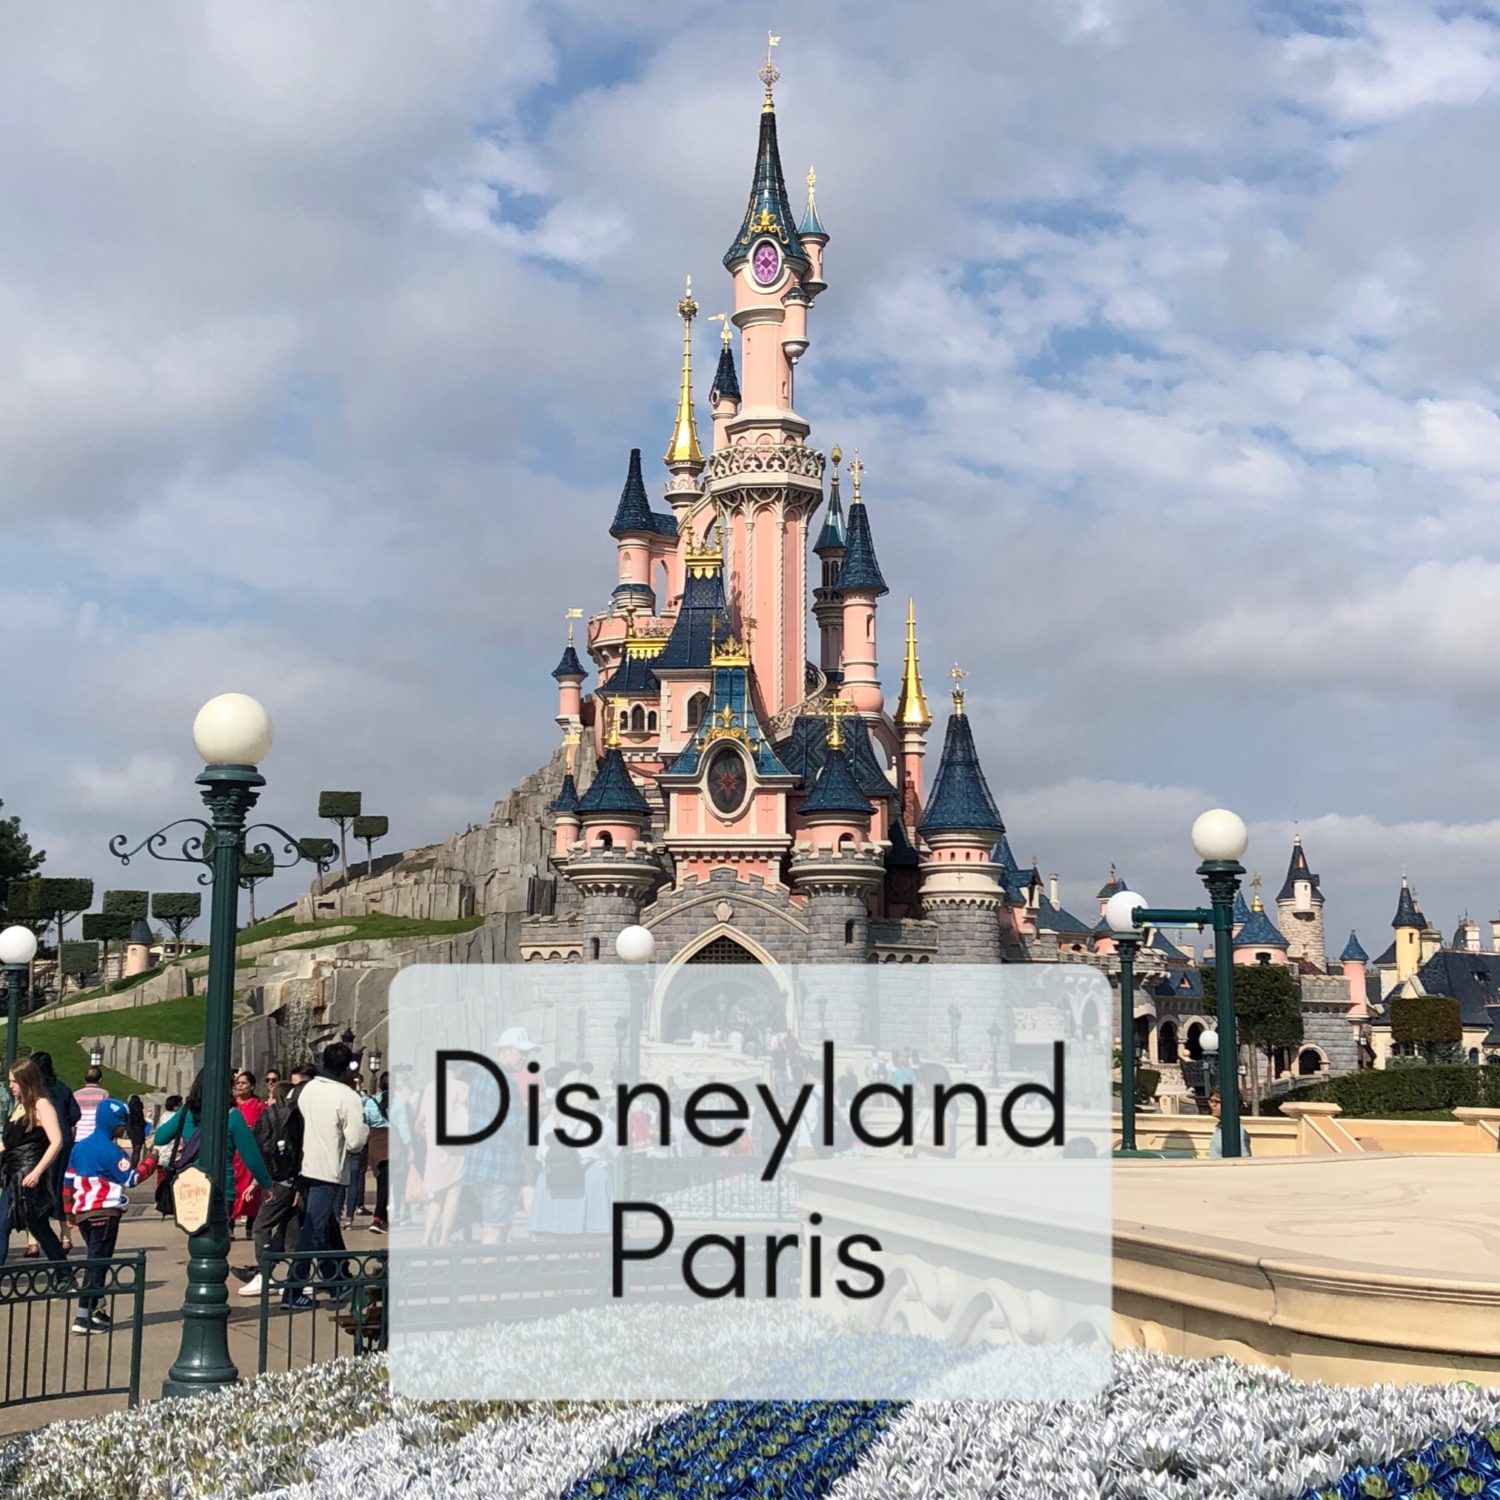 Disneyland Paris Solo: Is it worth it?